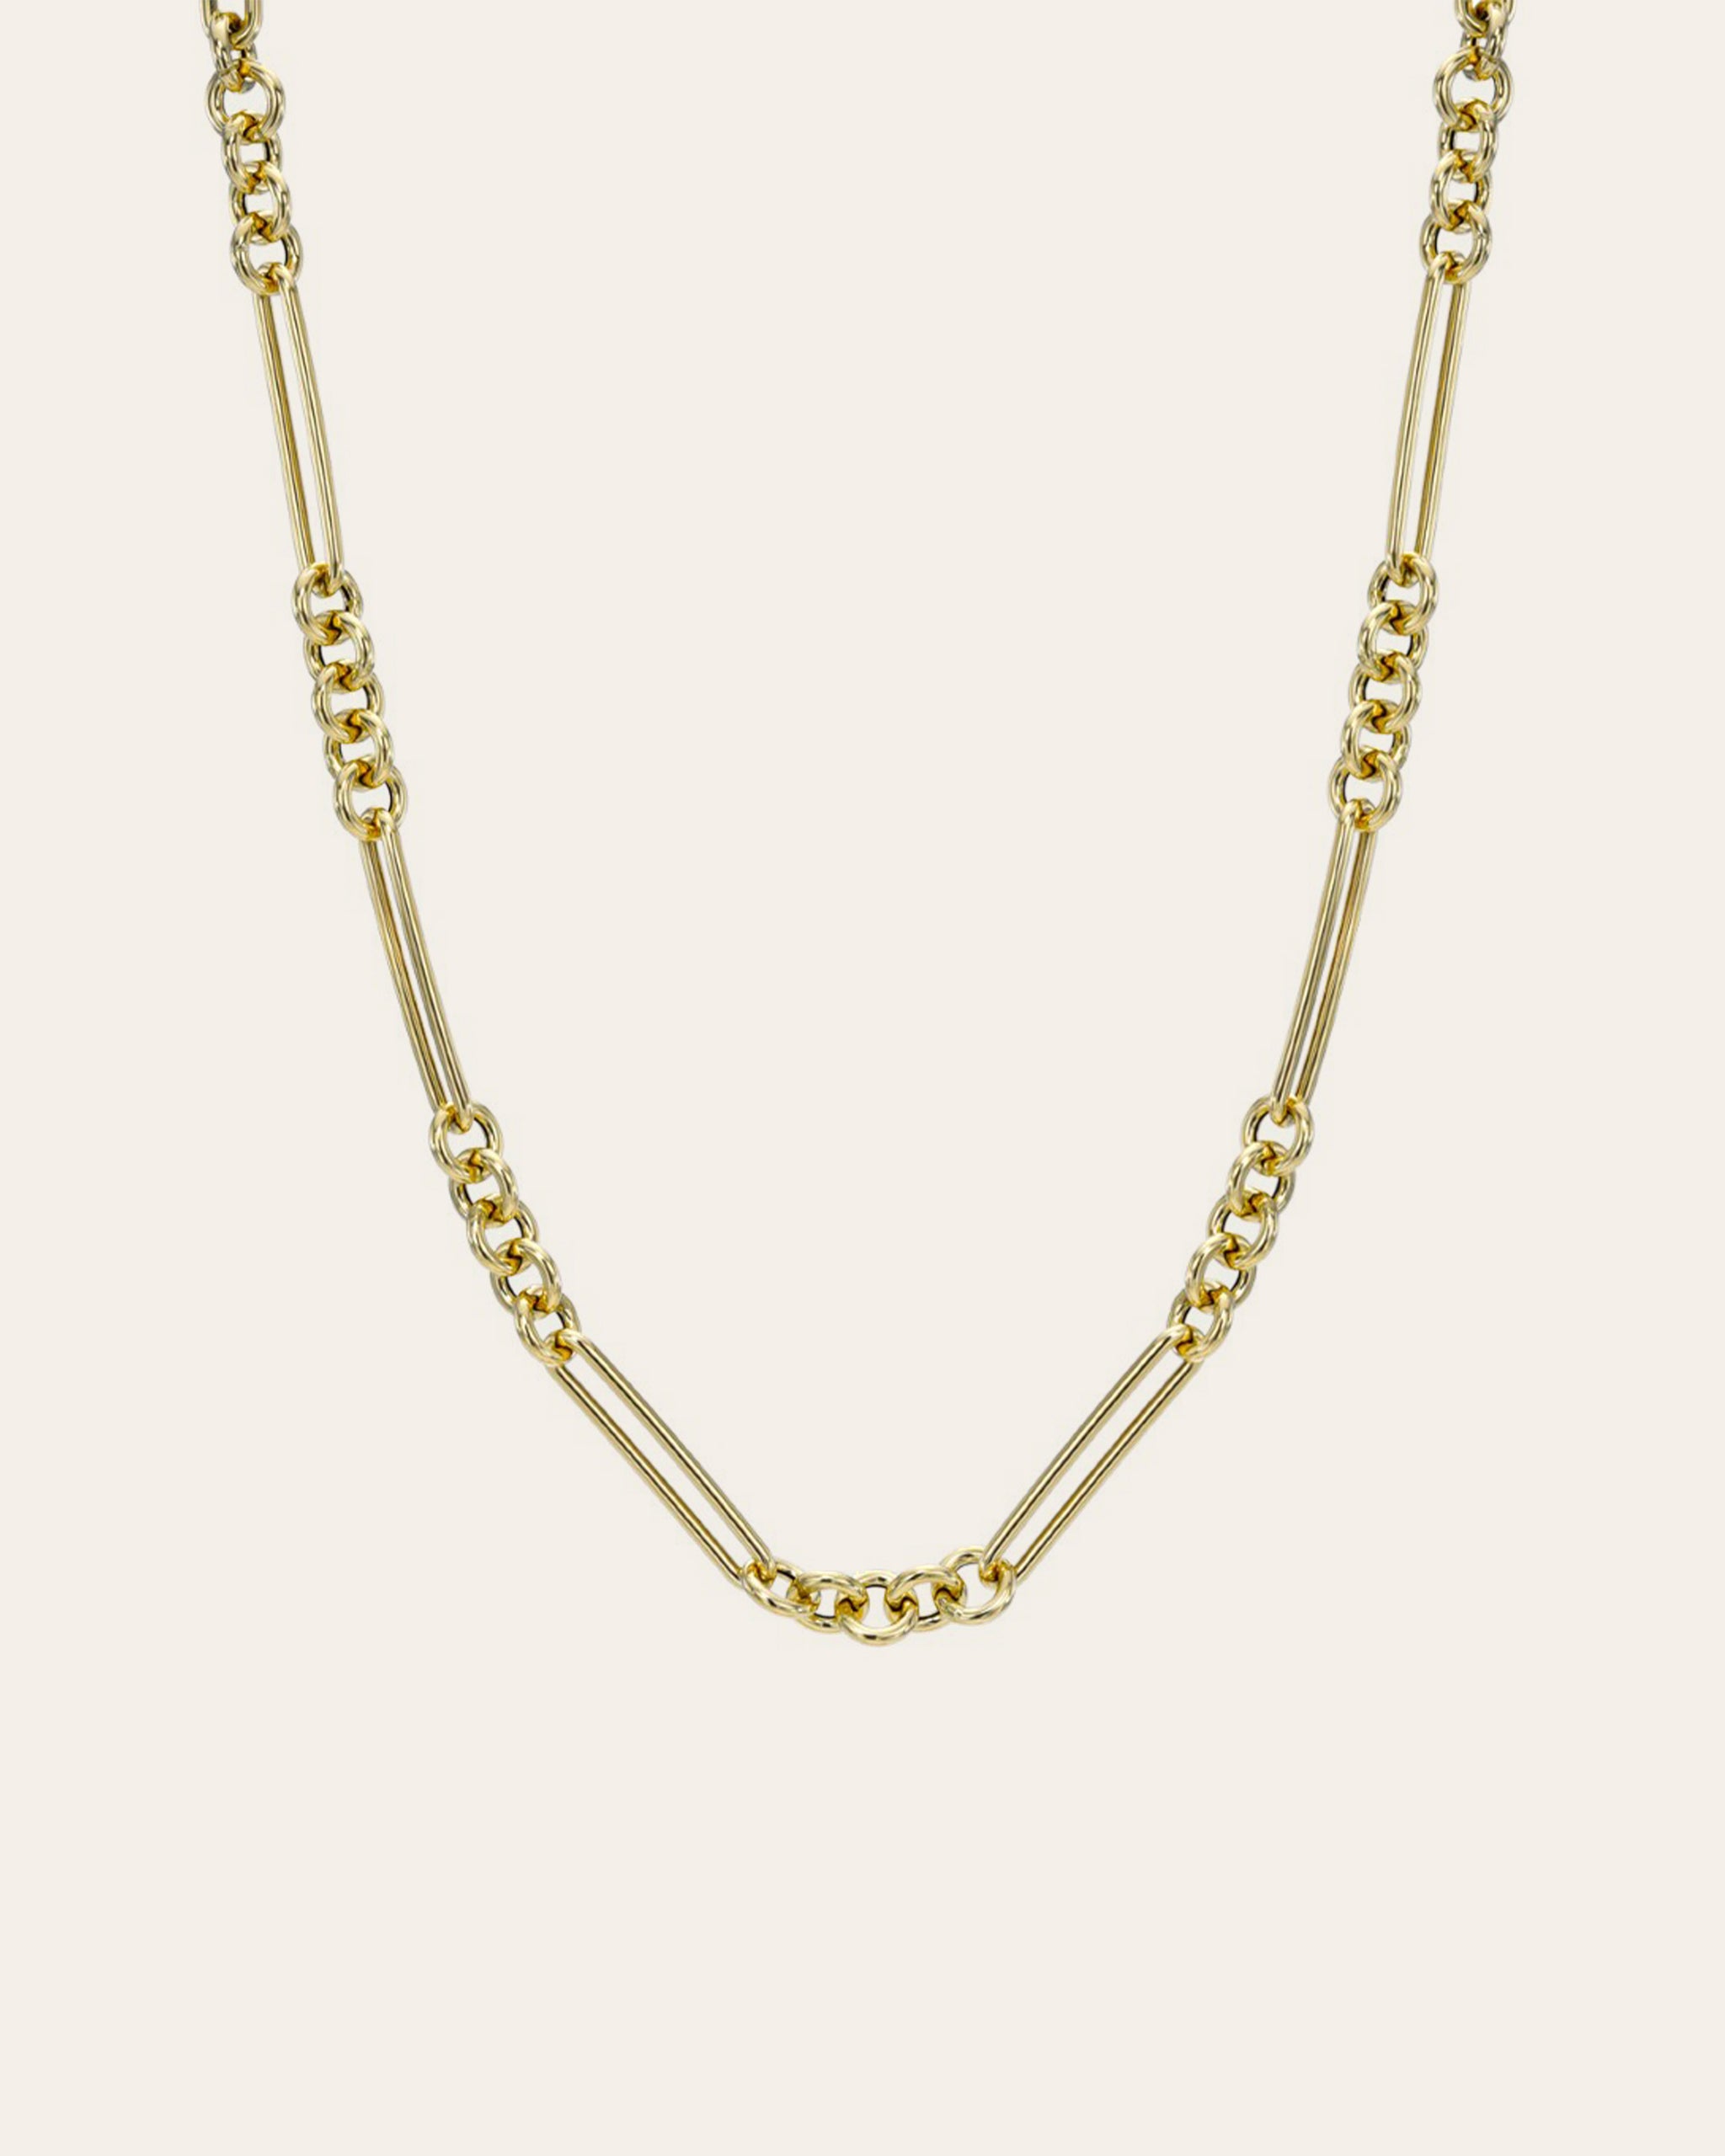 Amazon.com: LoveBling 14k White Gold 4mm Paper Clip Link Necklace (14